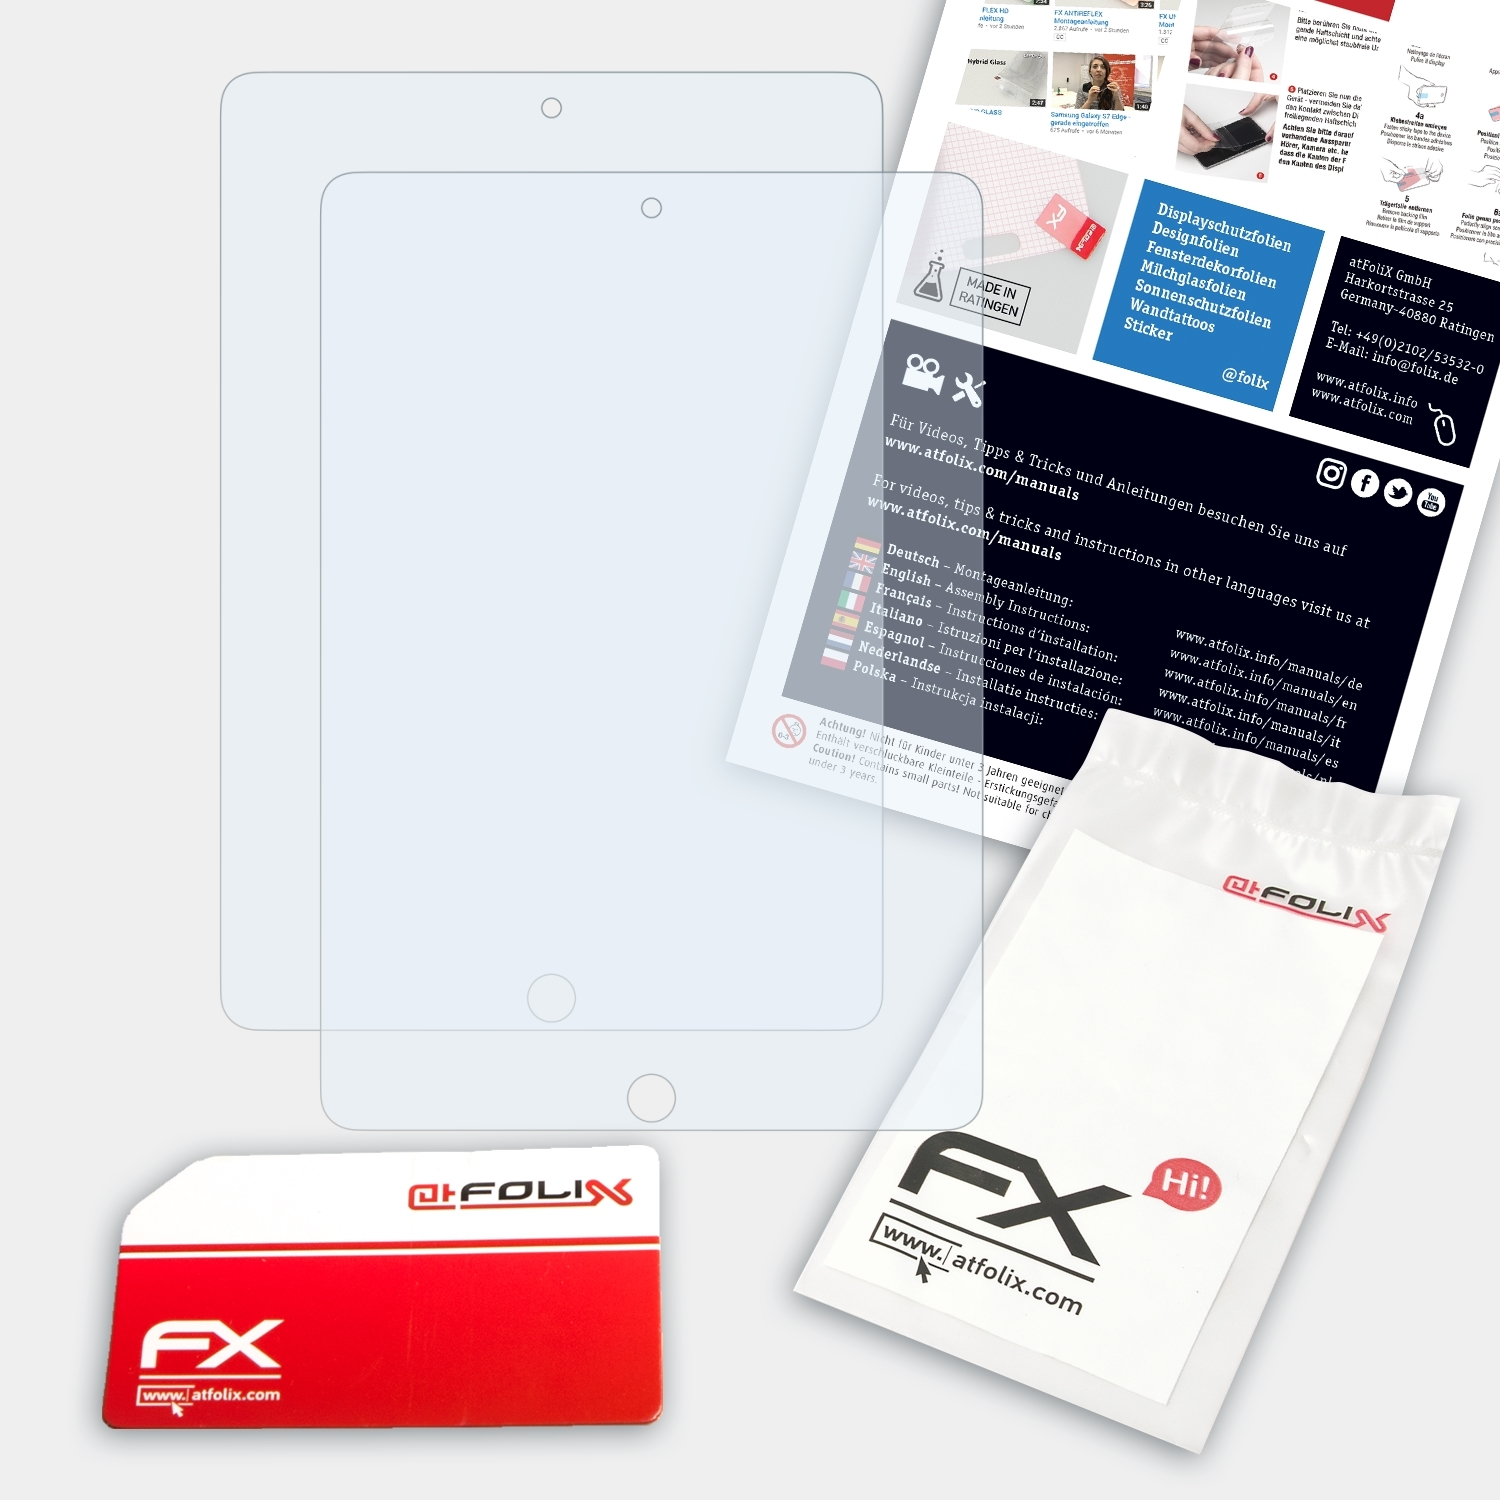 ATFOLIX 2x Apple (2021)) iPad Displayschutz(für FX-Clear